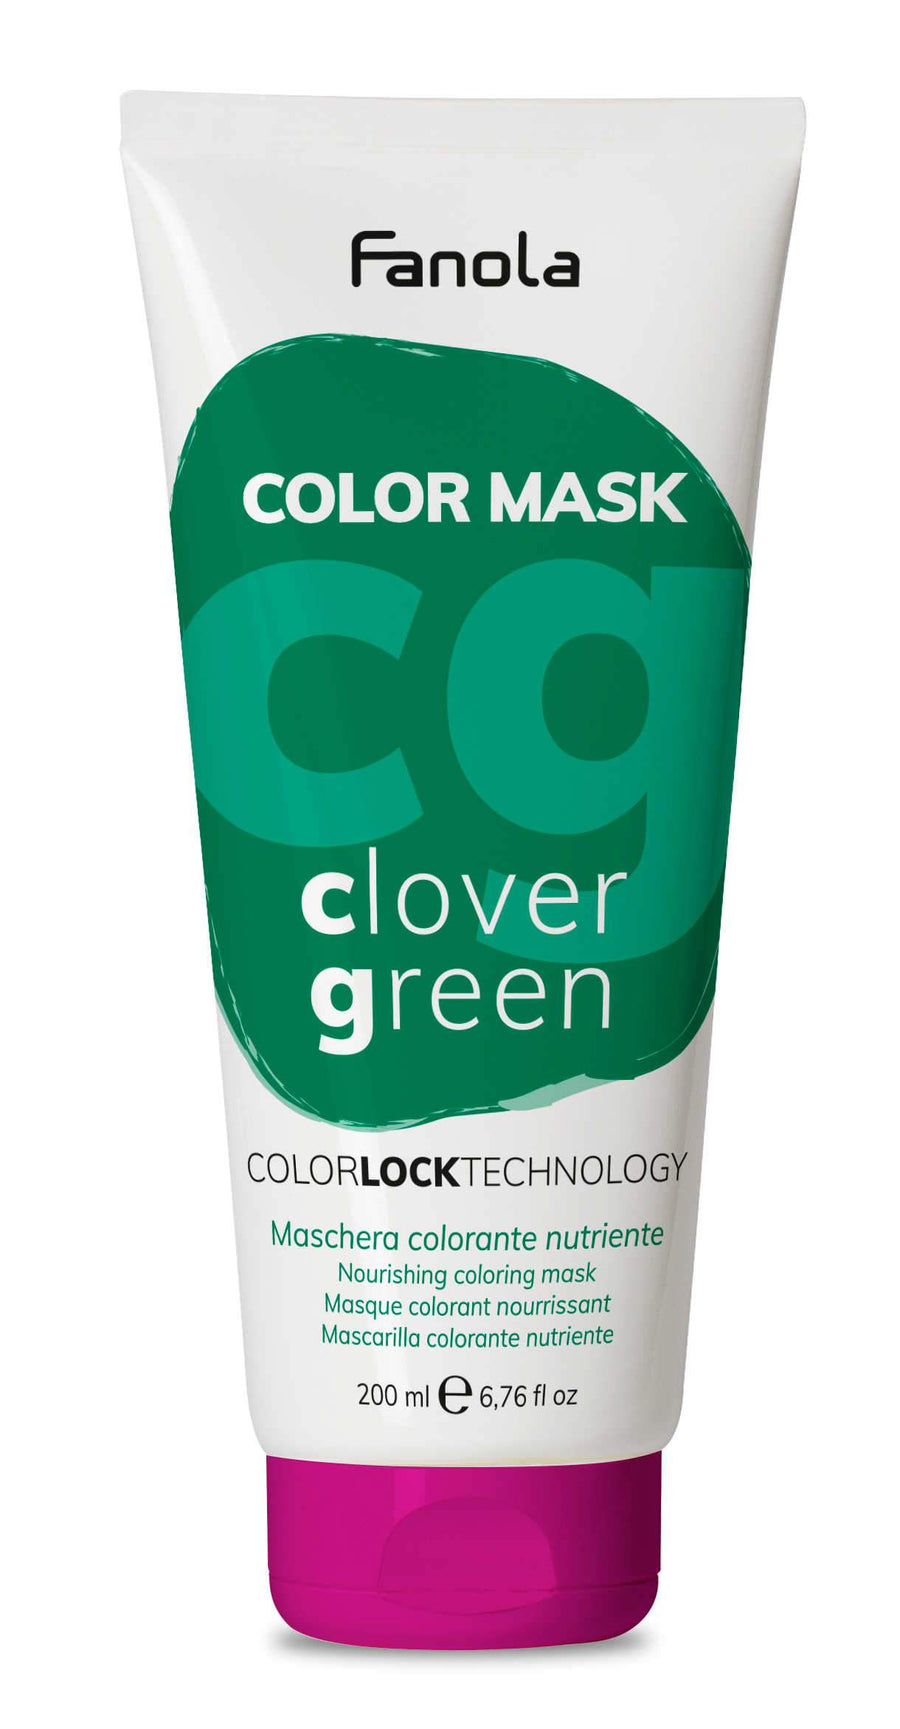 Fanola Color Mask, 200 ml Hair Treatments Fanola Clover Green 